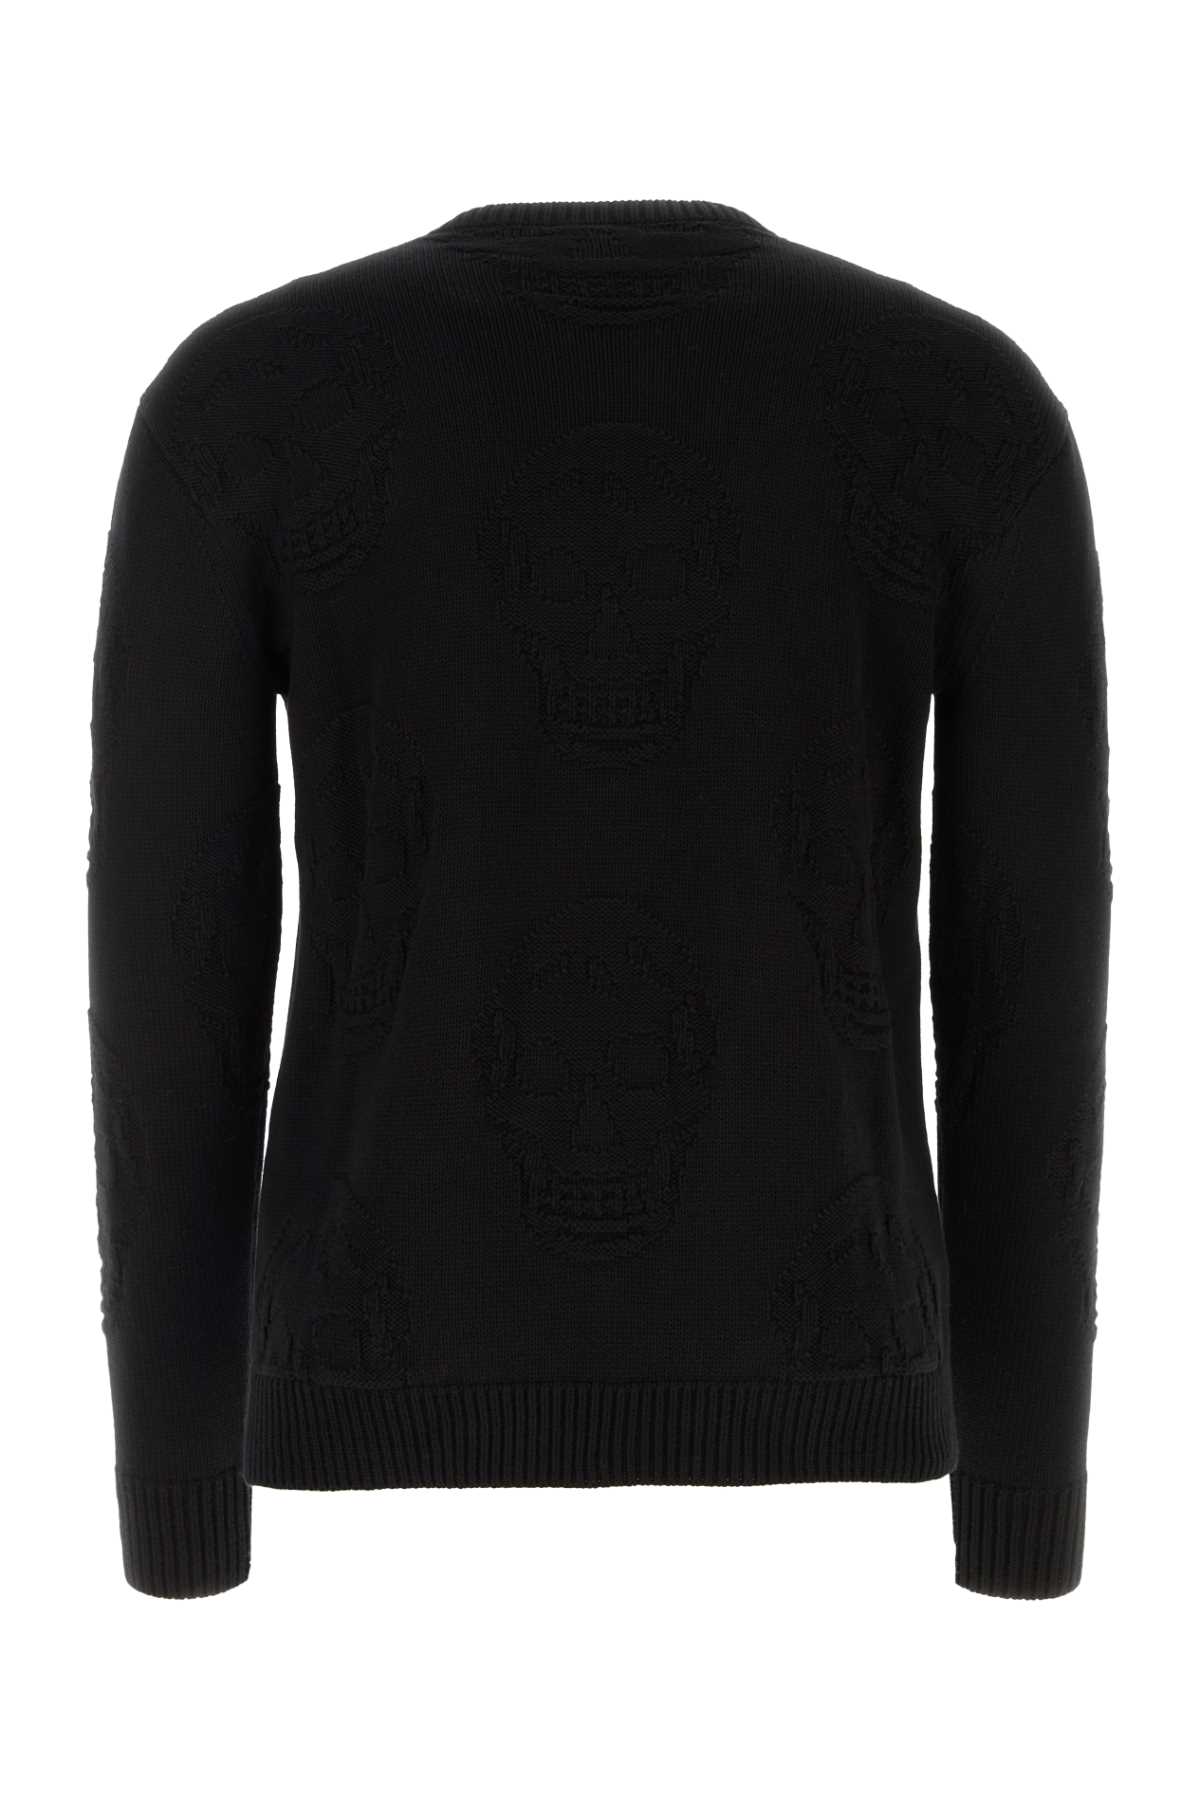 Alexander Mcqueen Black Cotton Sweater